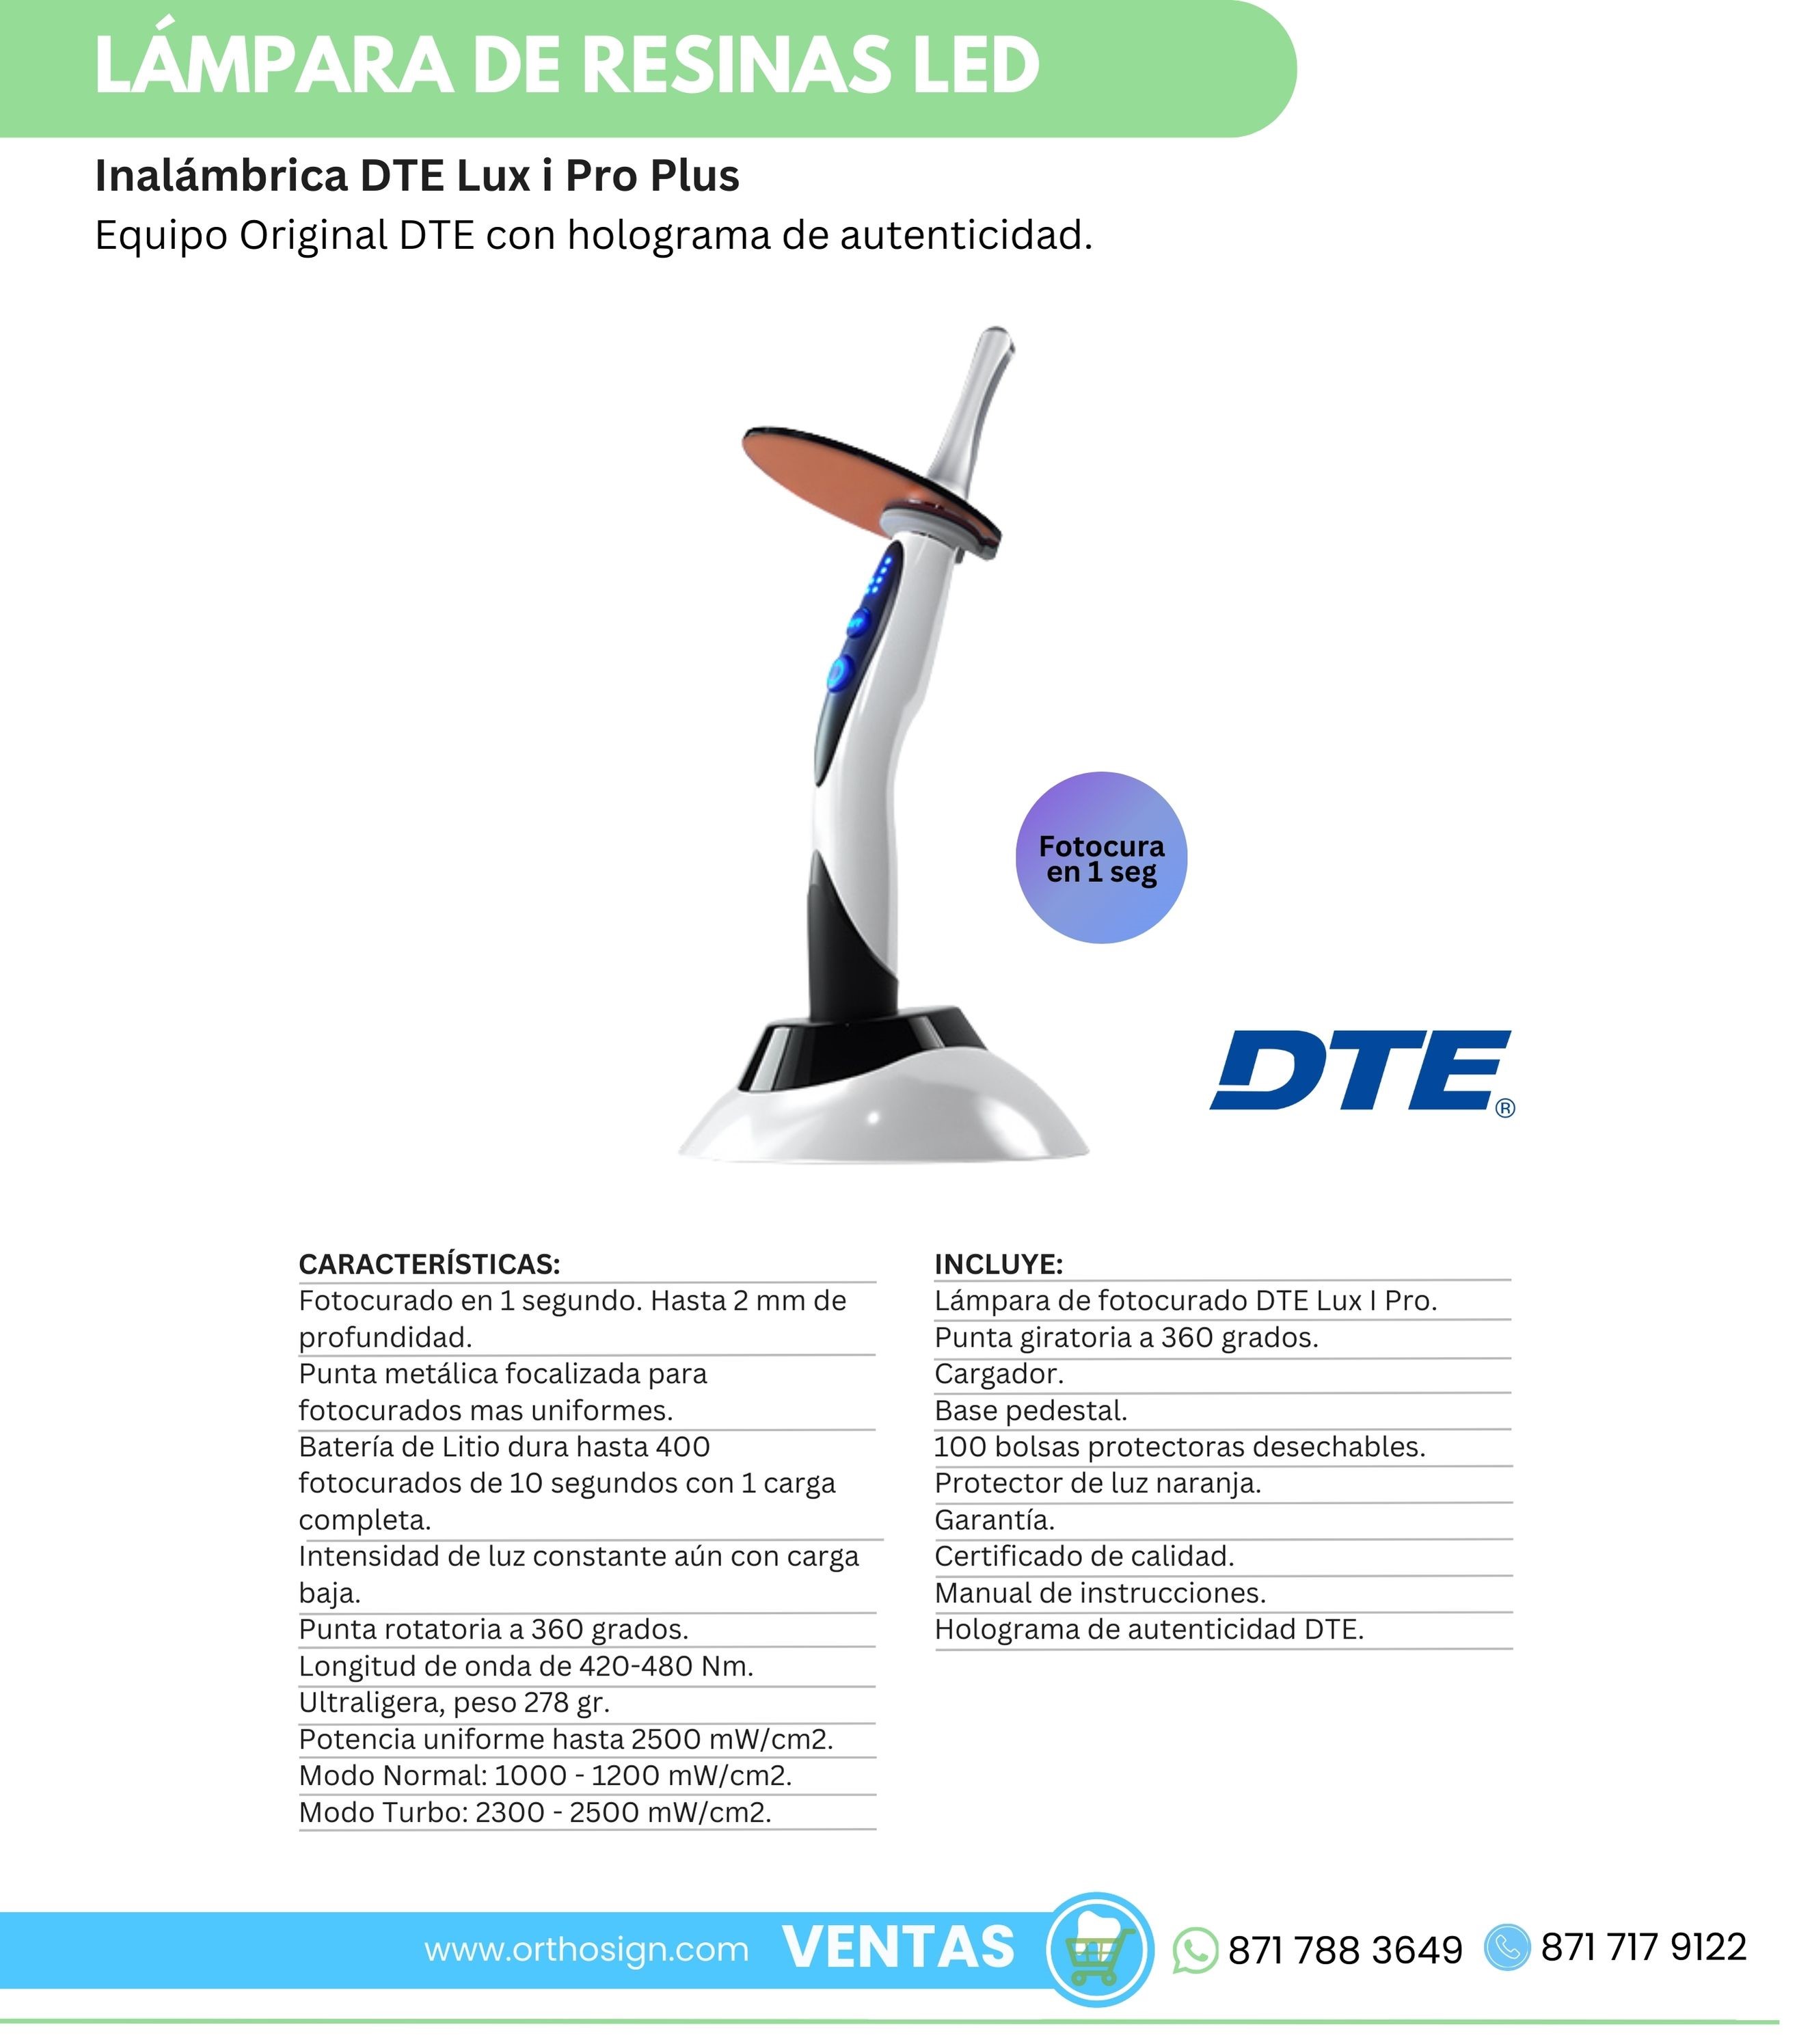 Lámpara de Resinas LED Inalámbrica DTE Lux i Pro Plus Orthosign